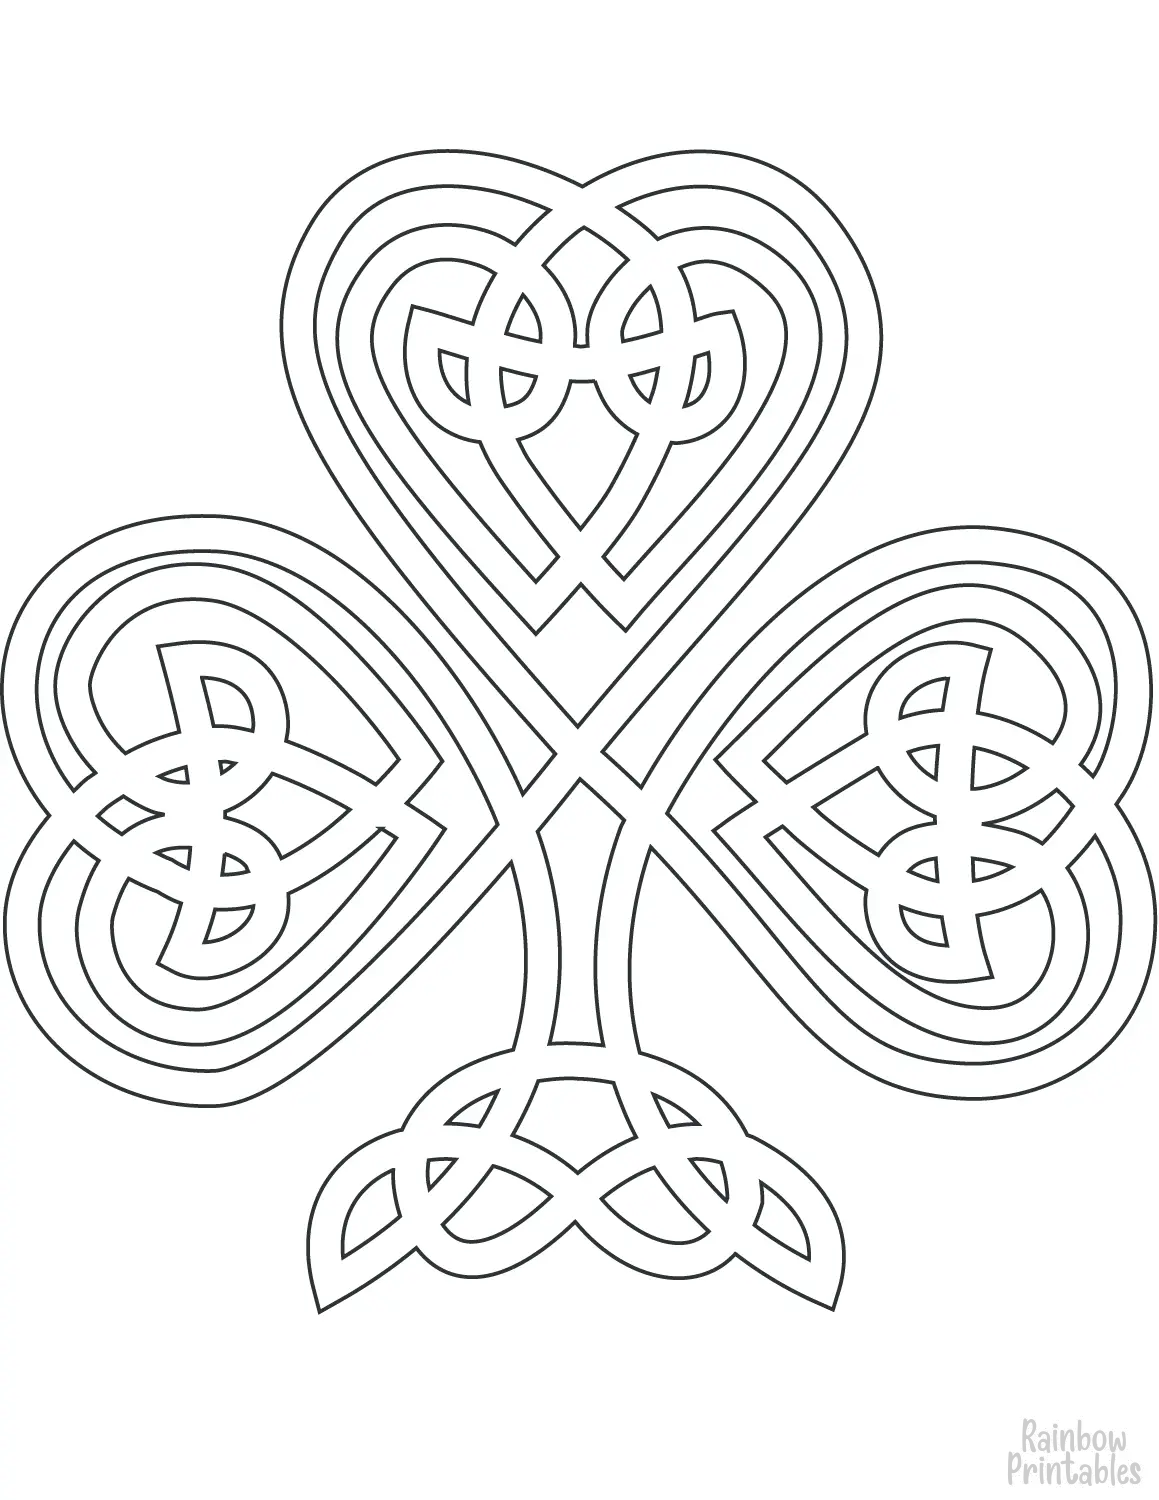 Celtic Shamrock Clover DESIGN Pattern Mandala Coloring Pages for Kids Adults Art Activities Line Art